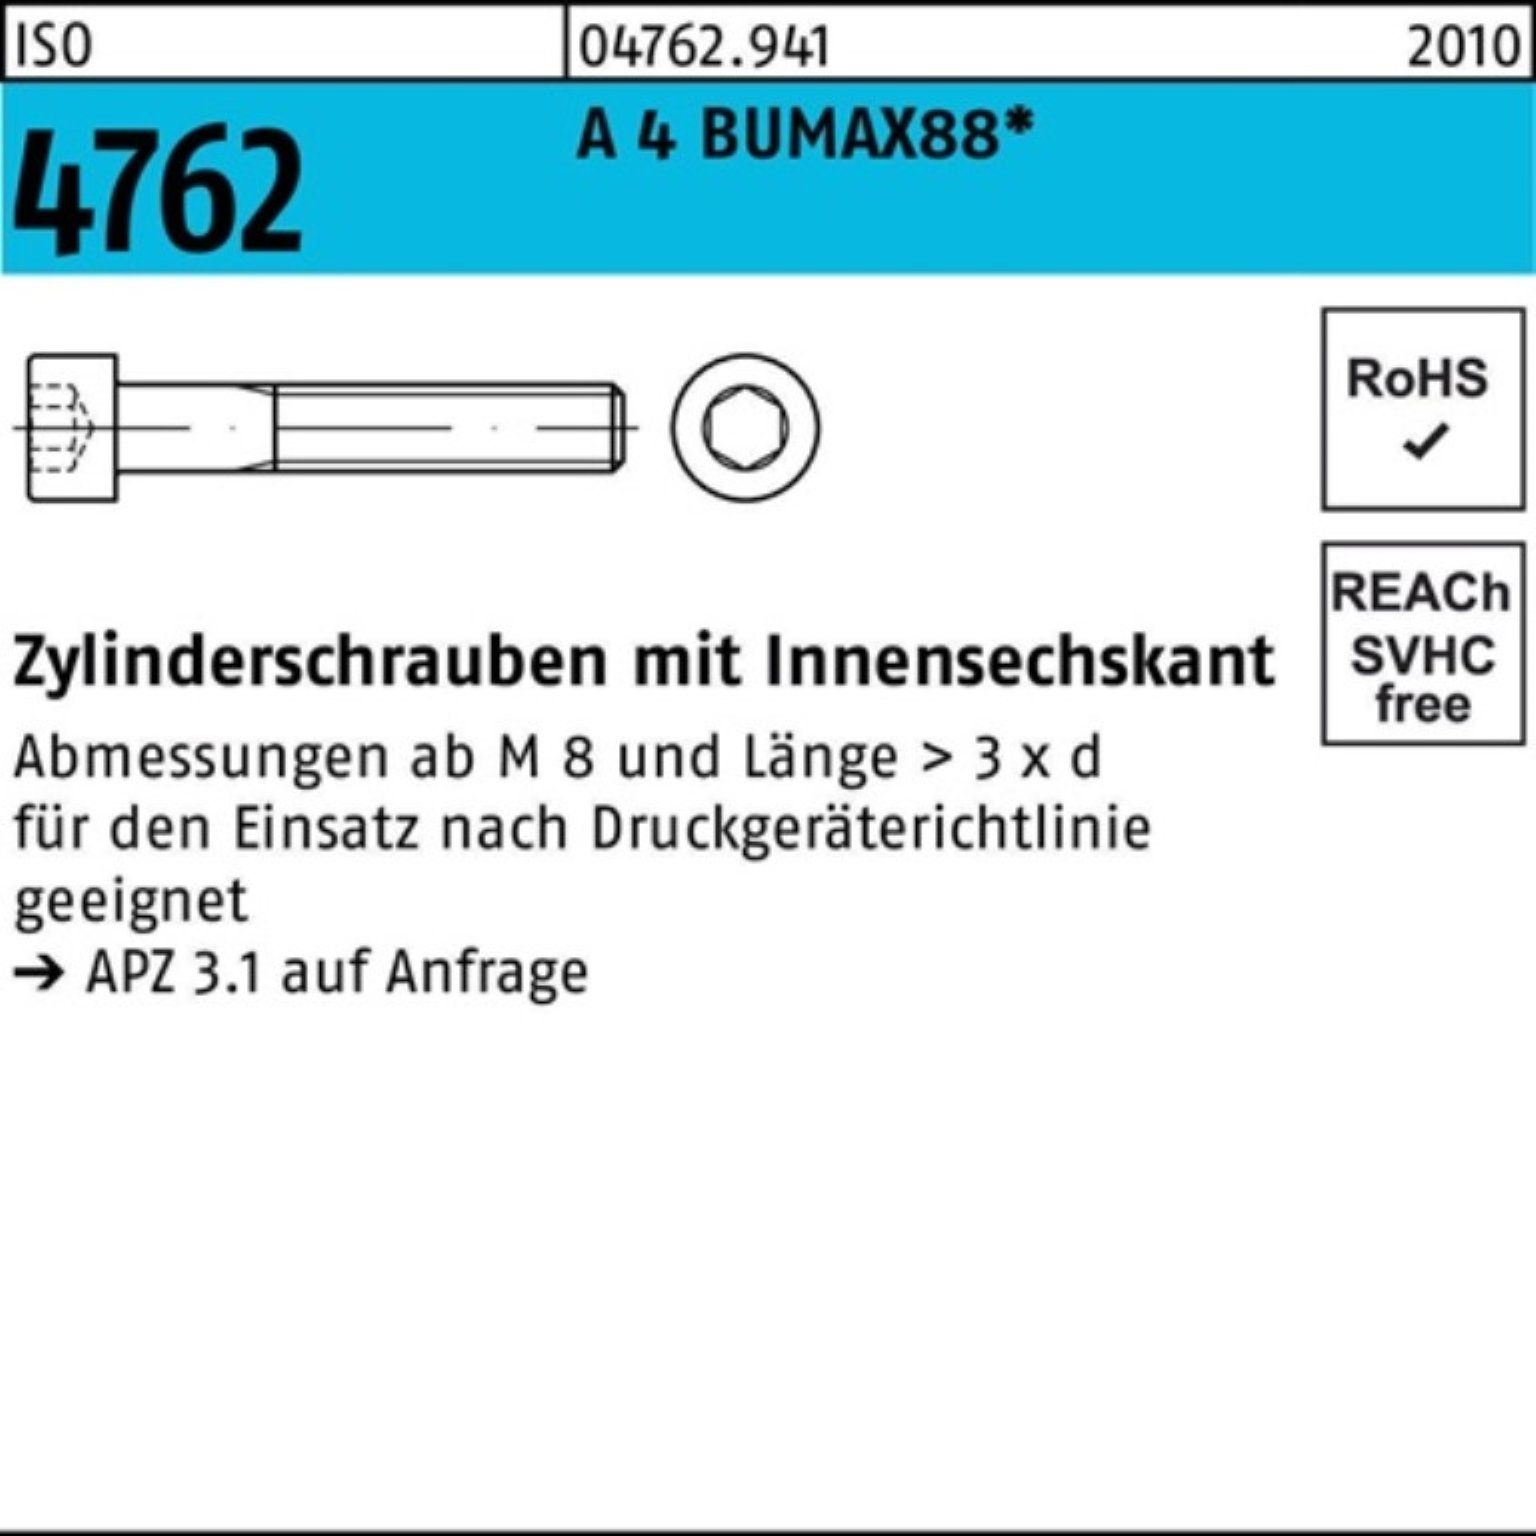 25 BUMAX88 100er Zylinderschraube Pack M12x Zylinderschraube 4762 Bufab 60 Innen-6kt ISO 4 A